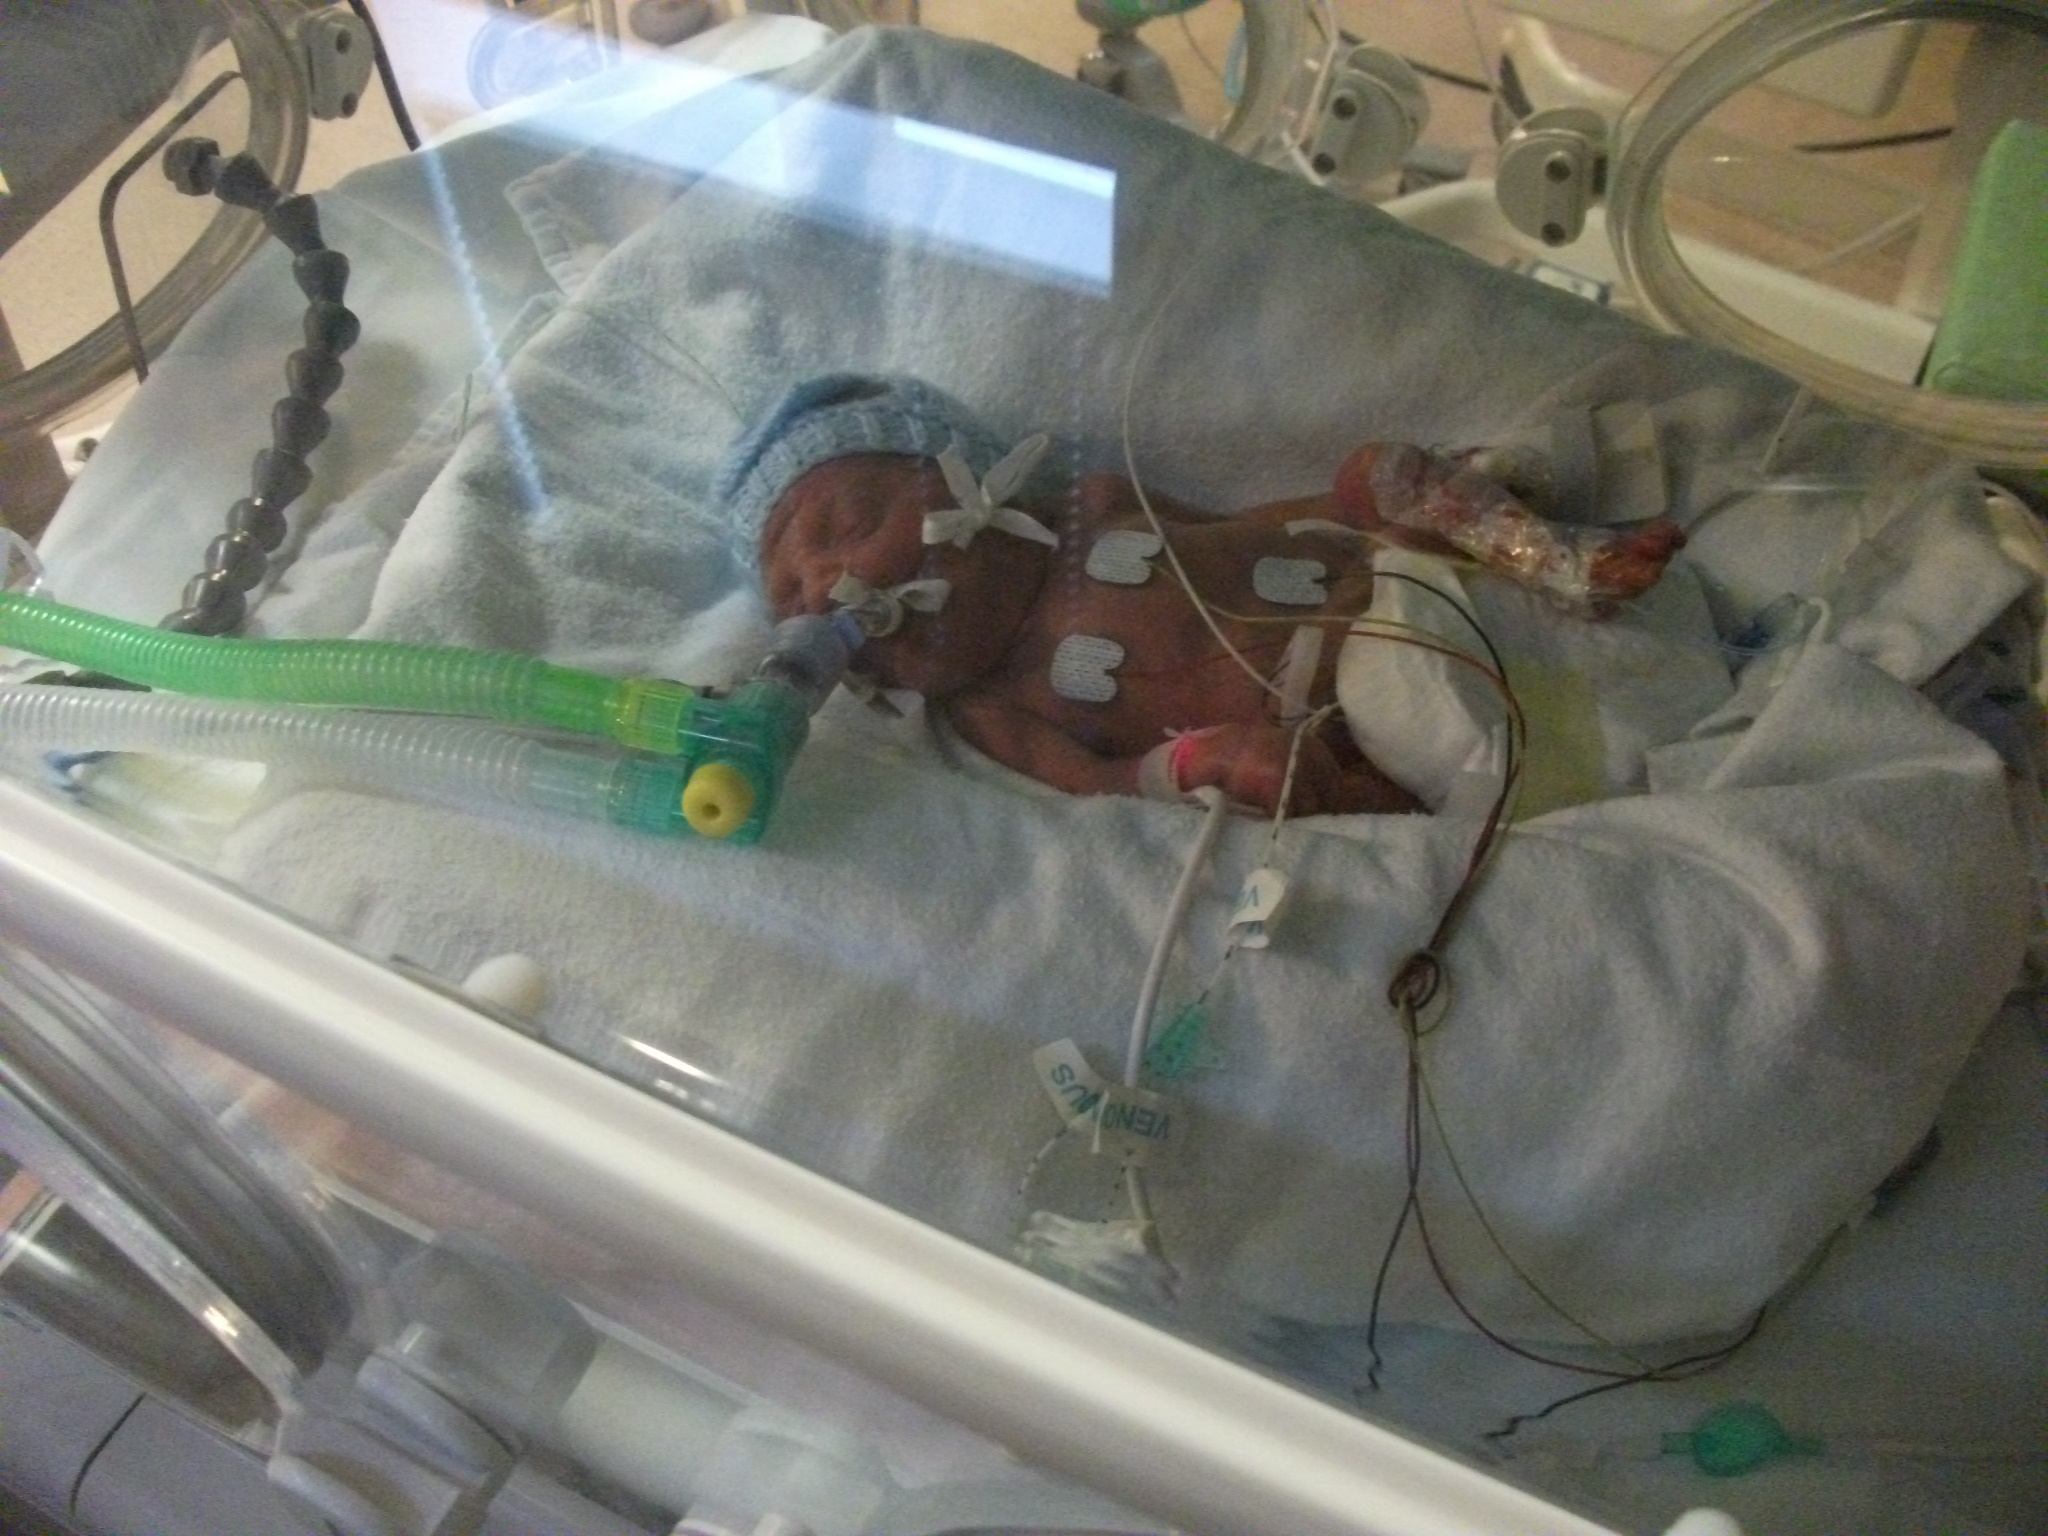 Baby Sebastian in an incubator